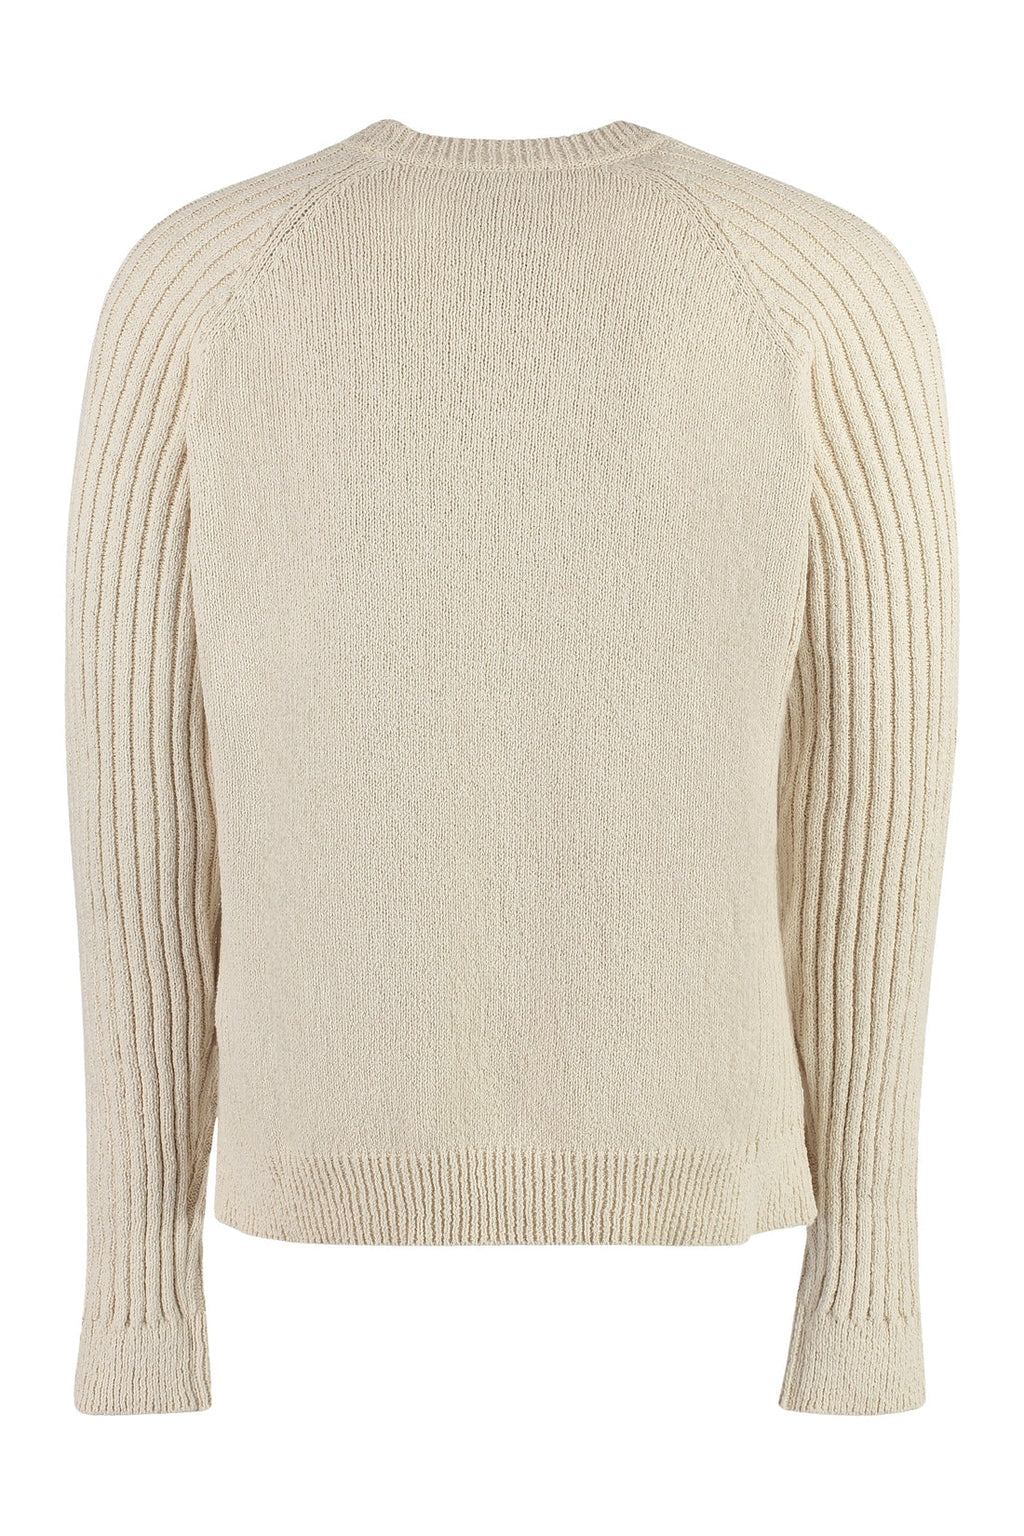 Balmain-OUTLET-SALE-Long sleeve crew-neck sweater-ARCHIVIST